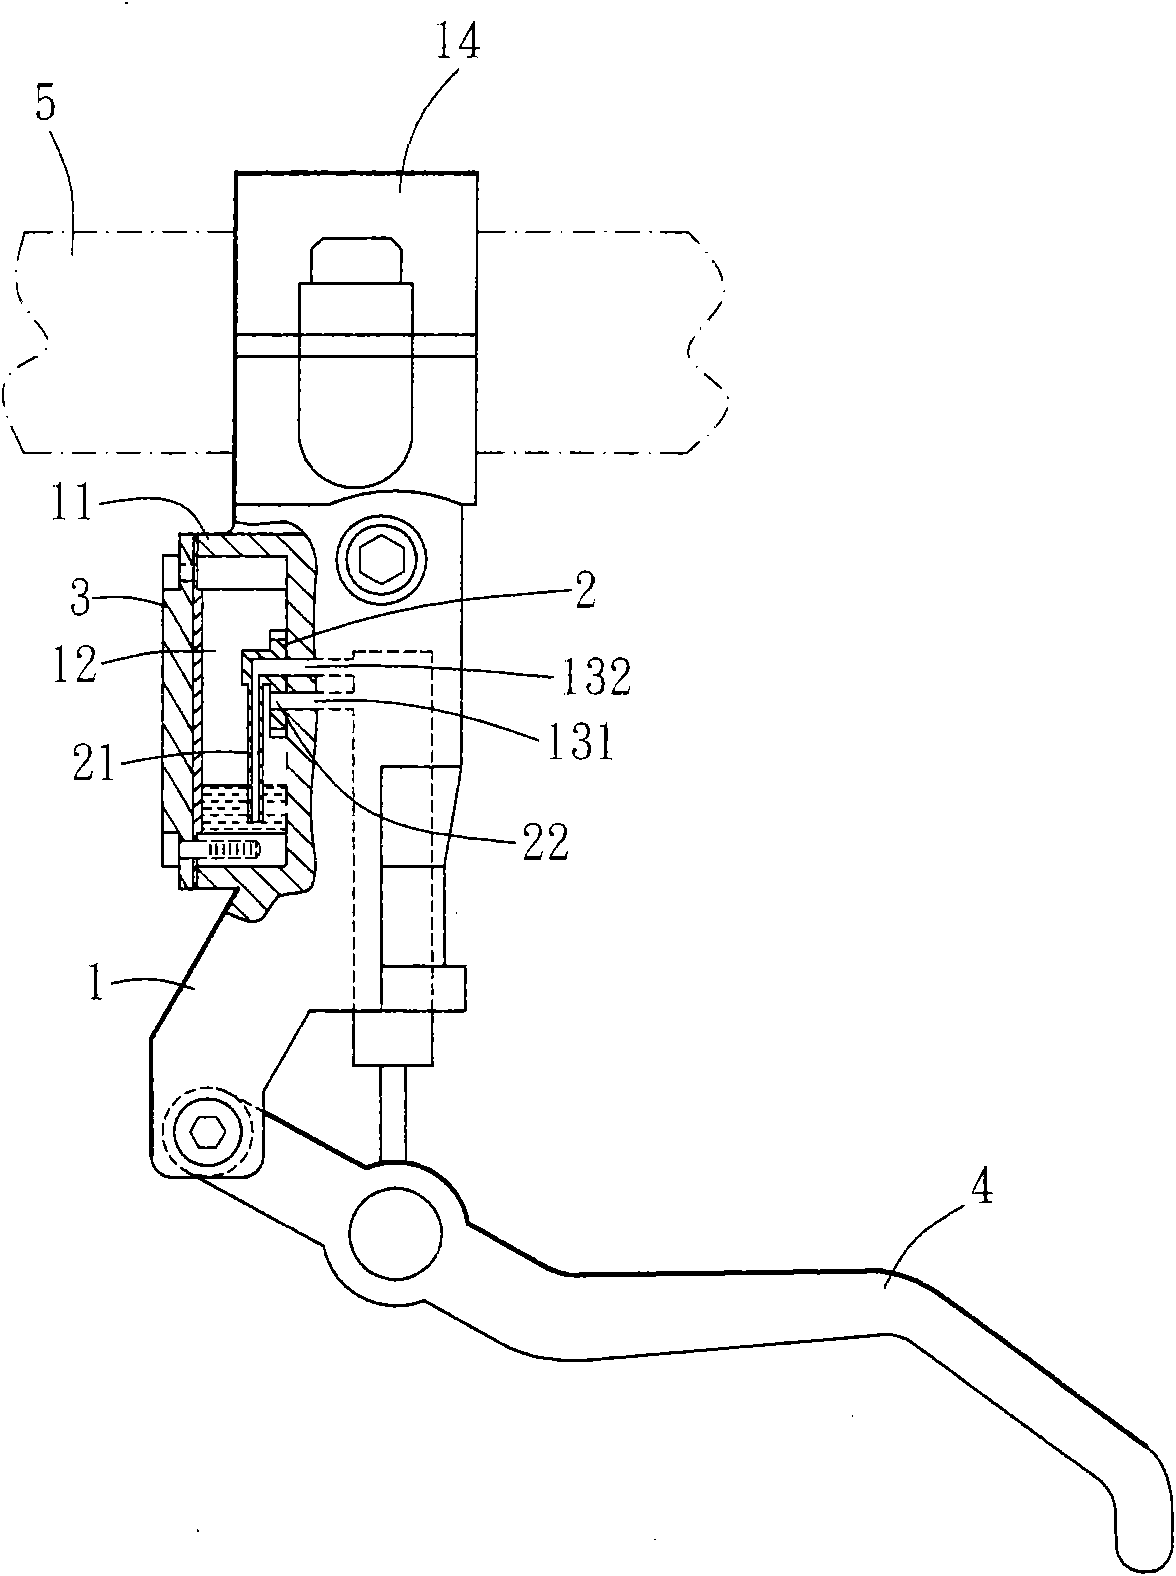 Oil-guiding device for oil pressure brake